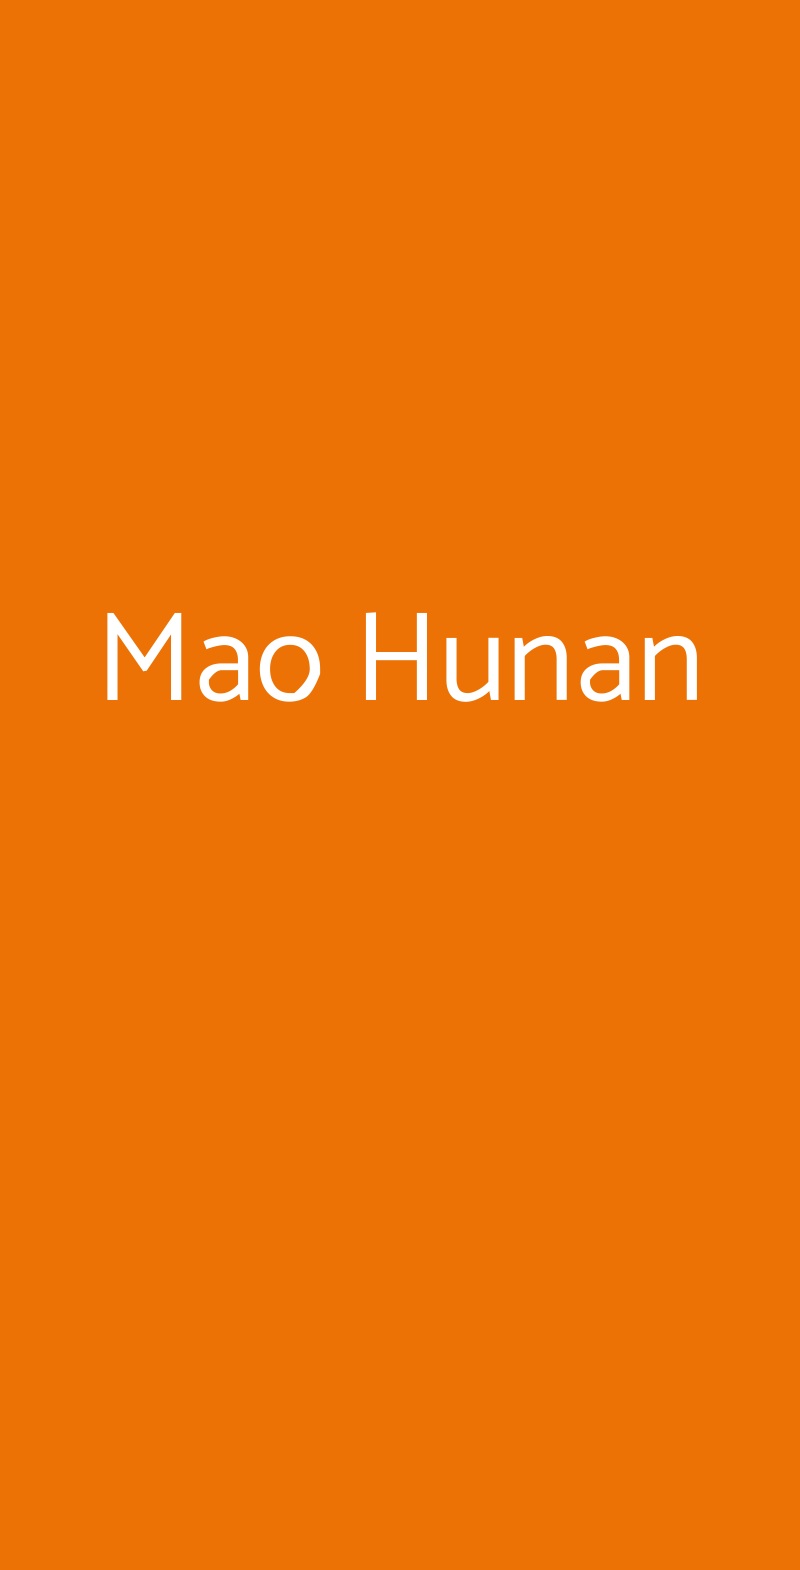 Mao Hunan Milano menù 1 pagina